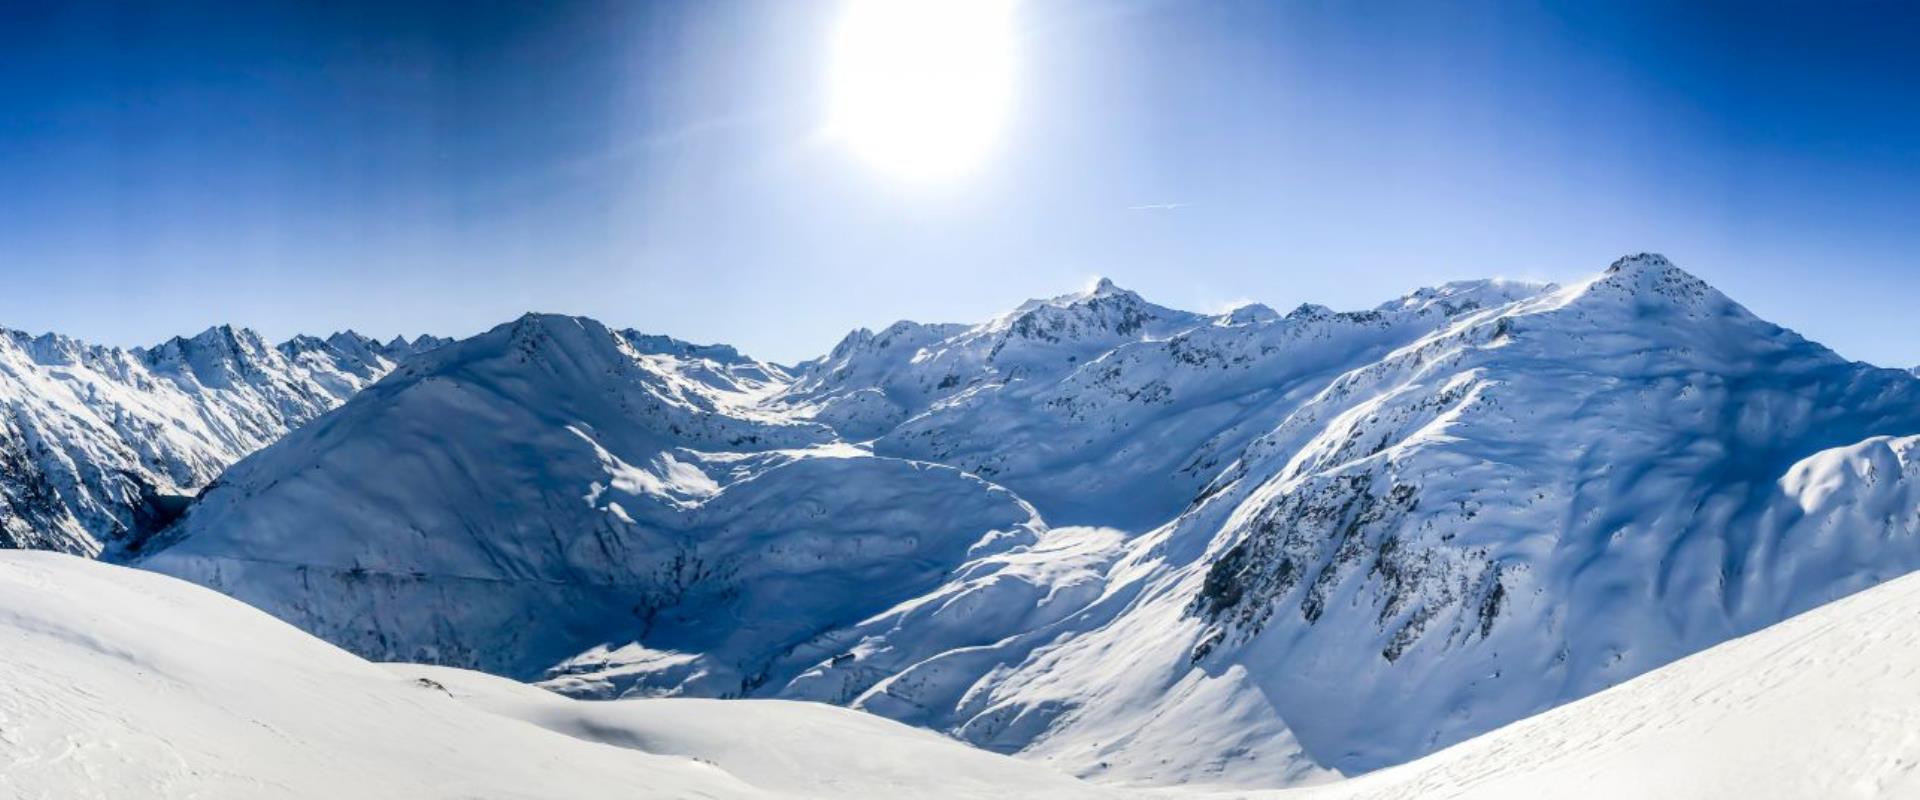 Luxury Ski Chalets in the Swiss Alps